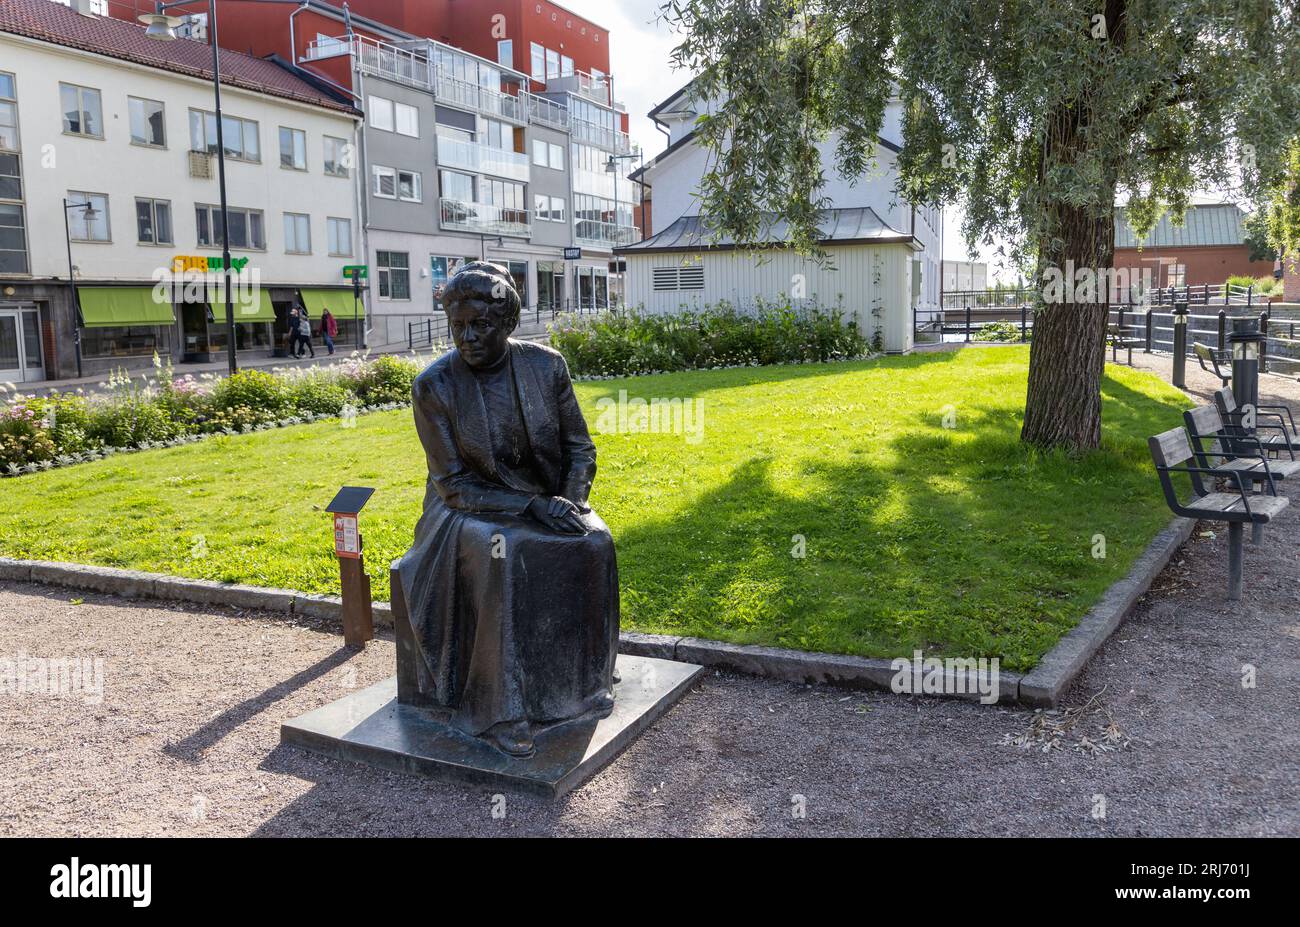 Selma Lagerlöf statue, Östra hamngatan, Falun, Sweden. Stock Photo